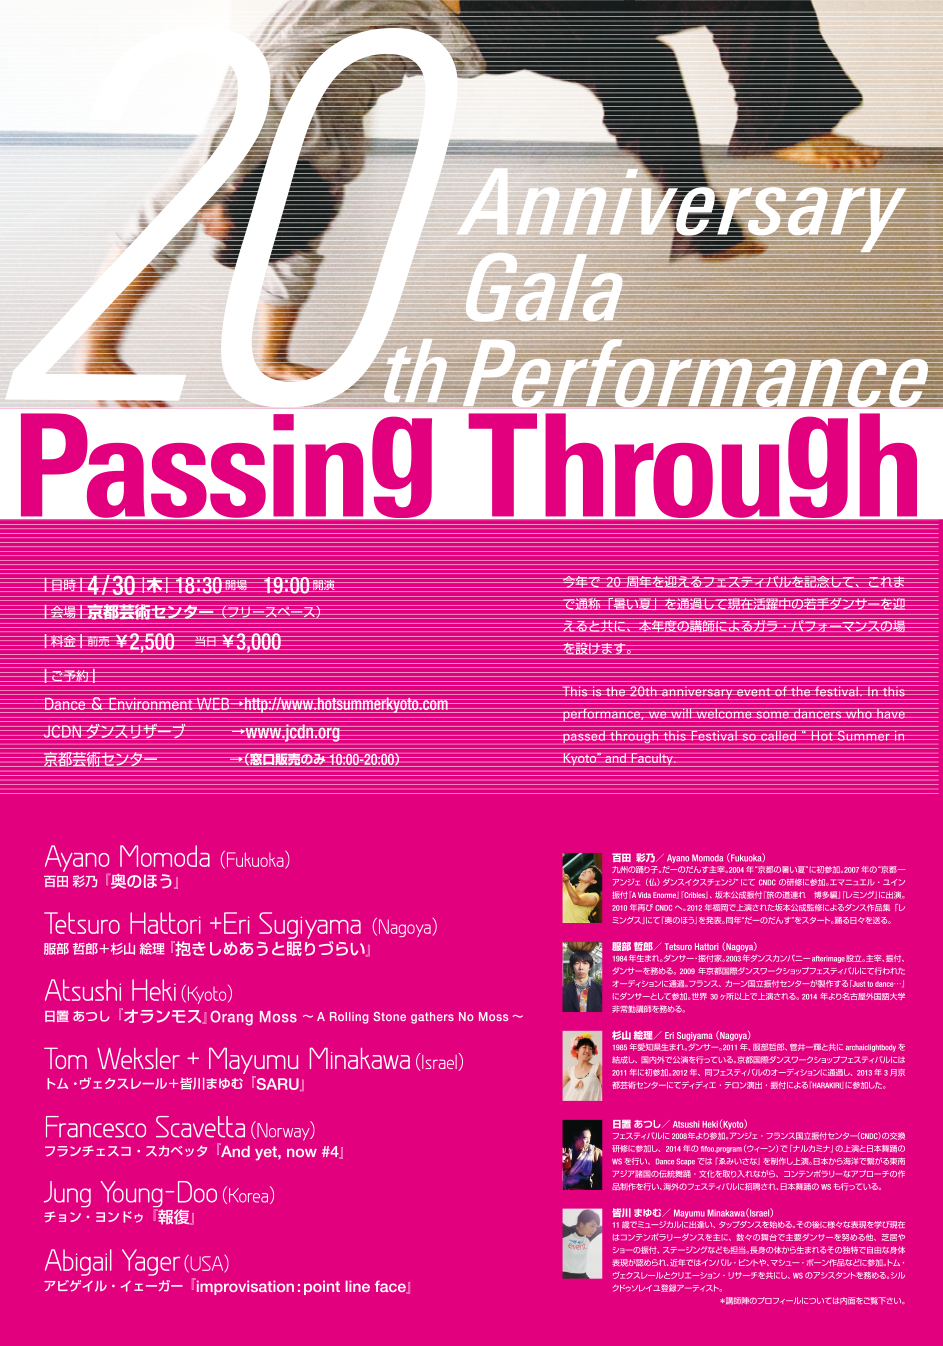 20th Anniversary Gala Performance Passing Through